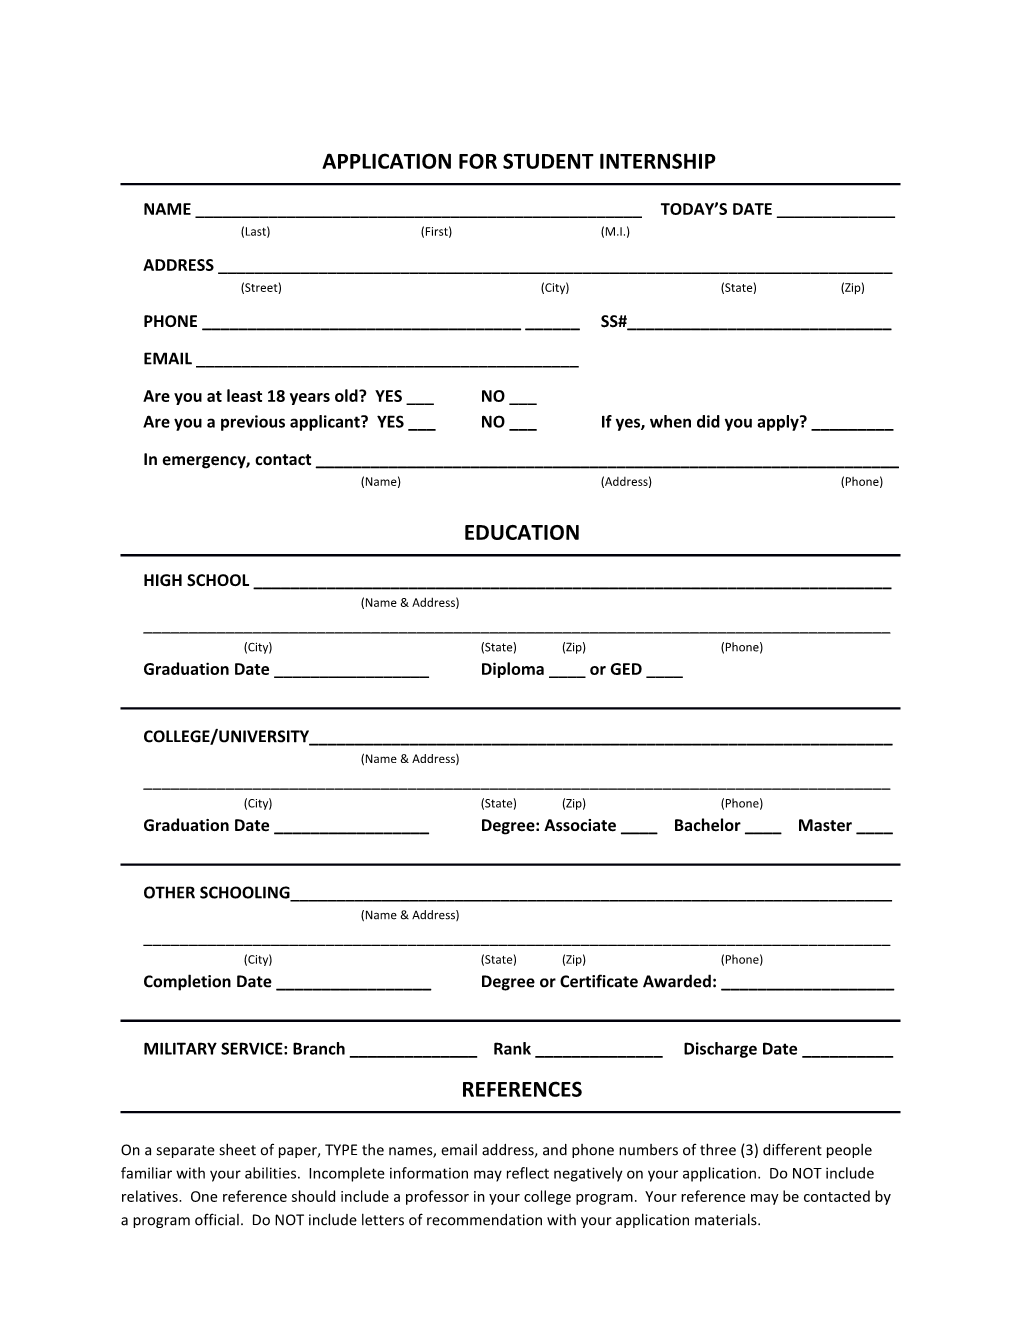 Application for Student Internship